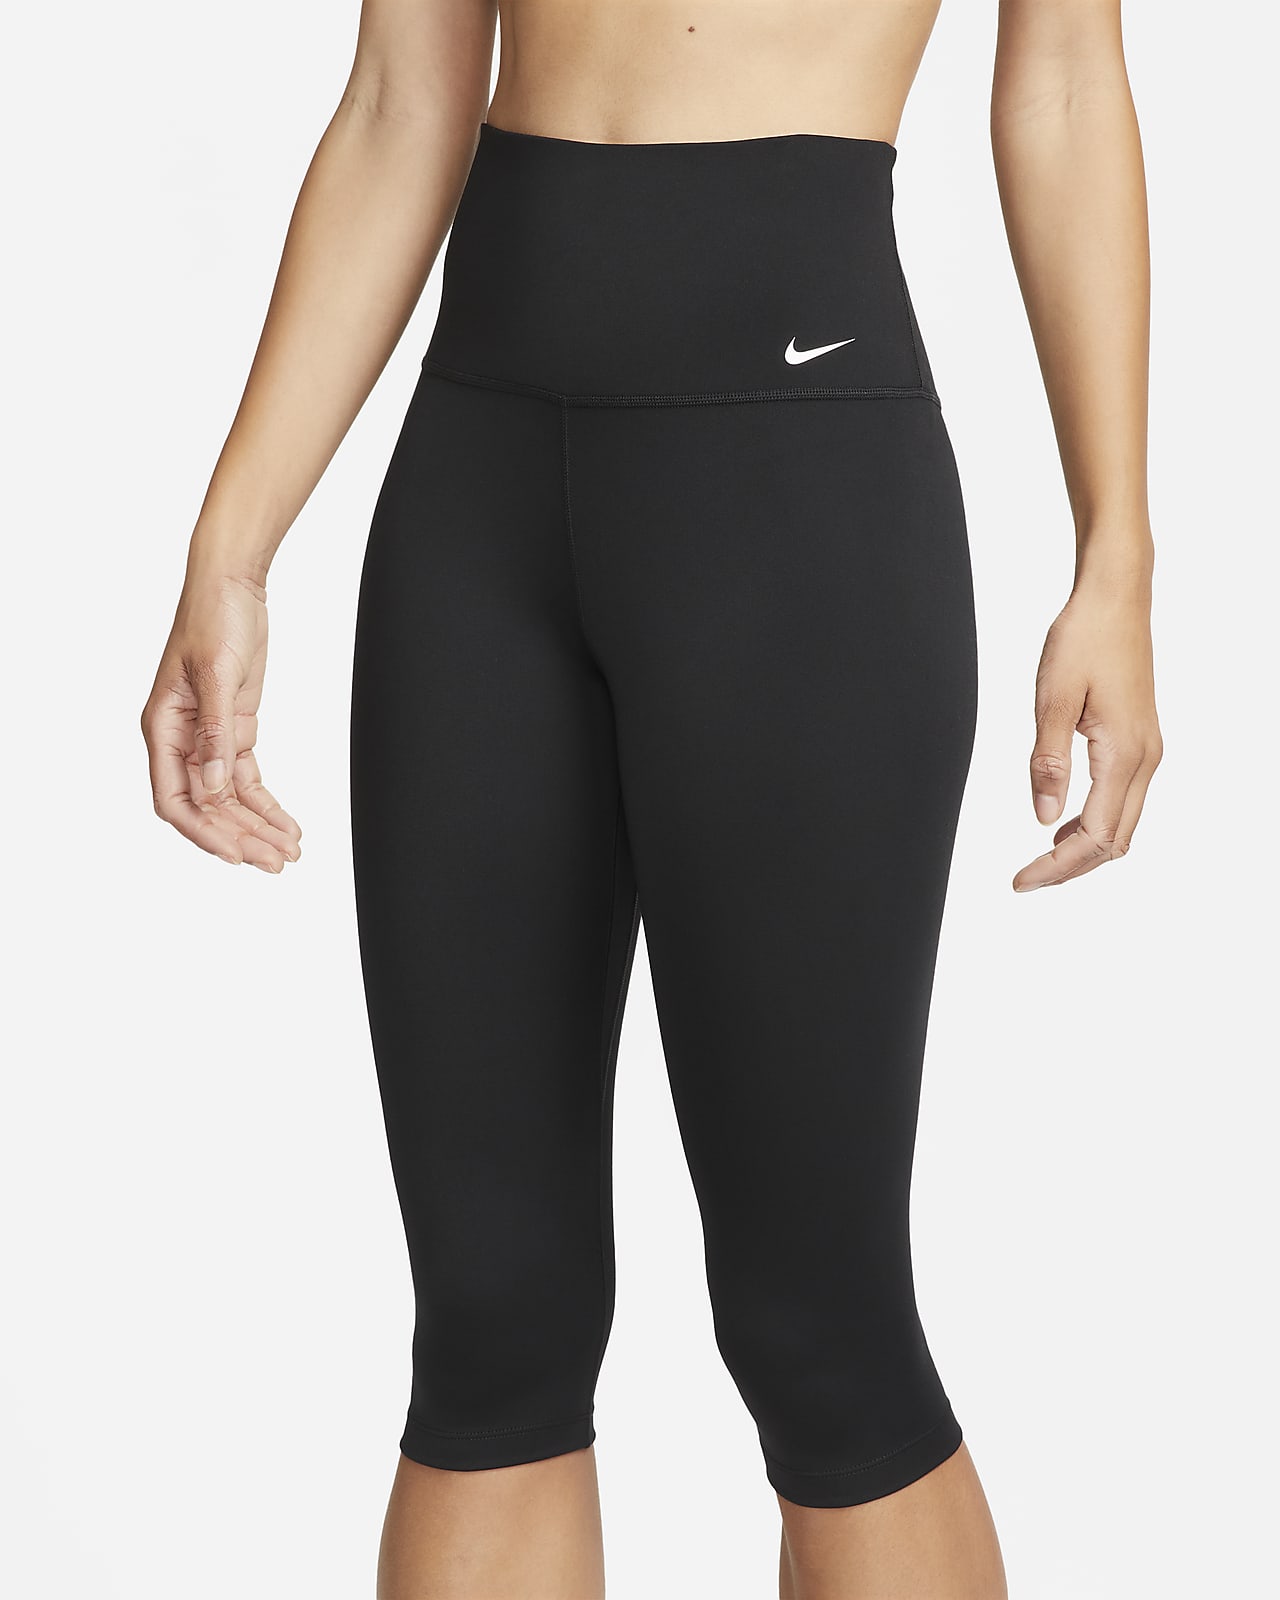 Legging femme Nike One - Pantalons / leggings - Femme - Entretien Physique